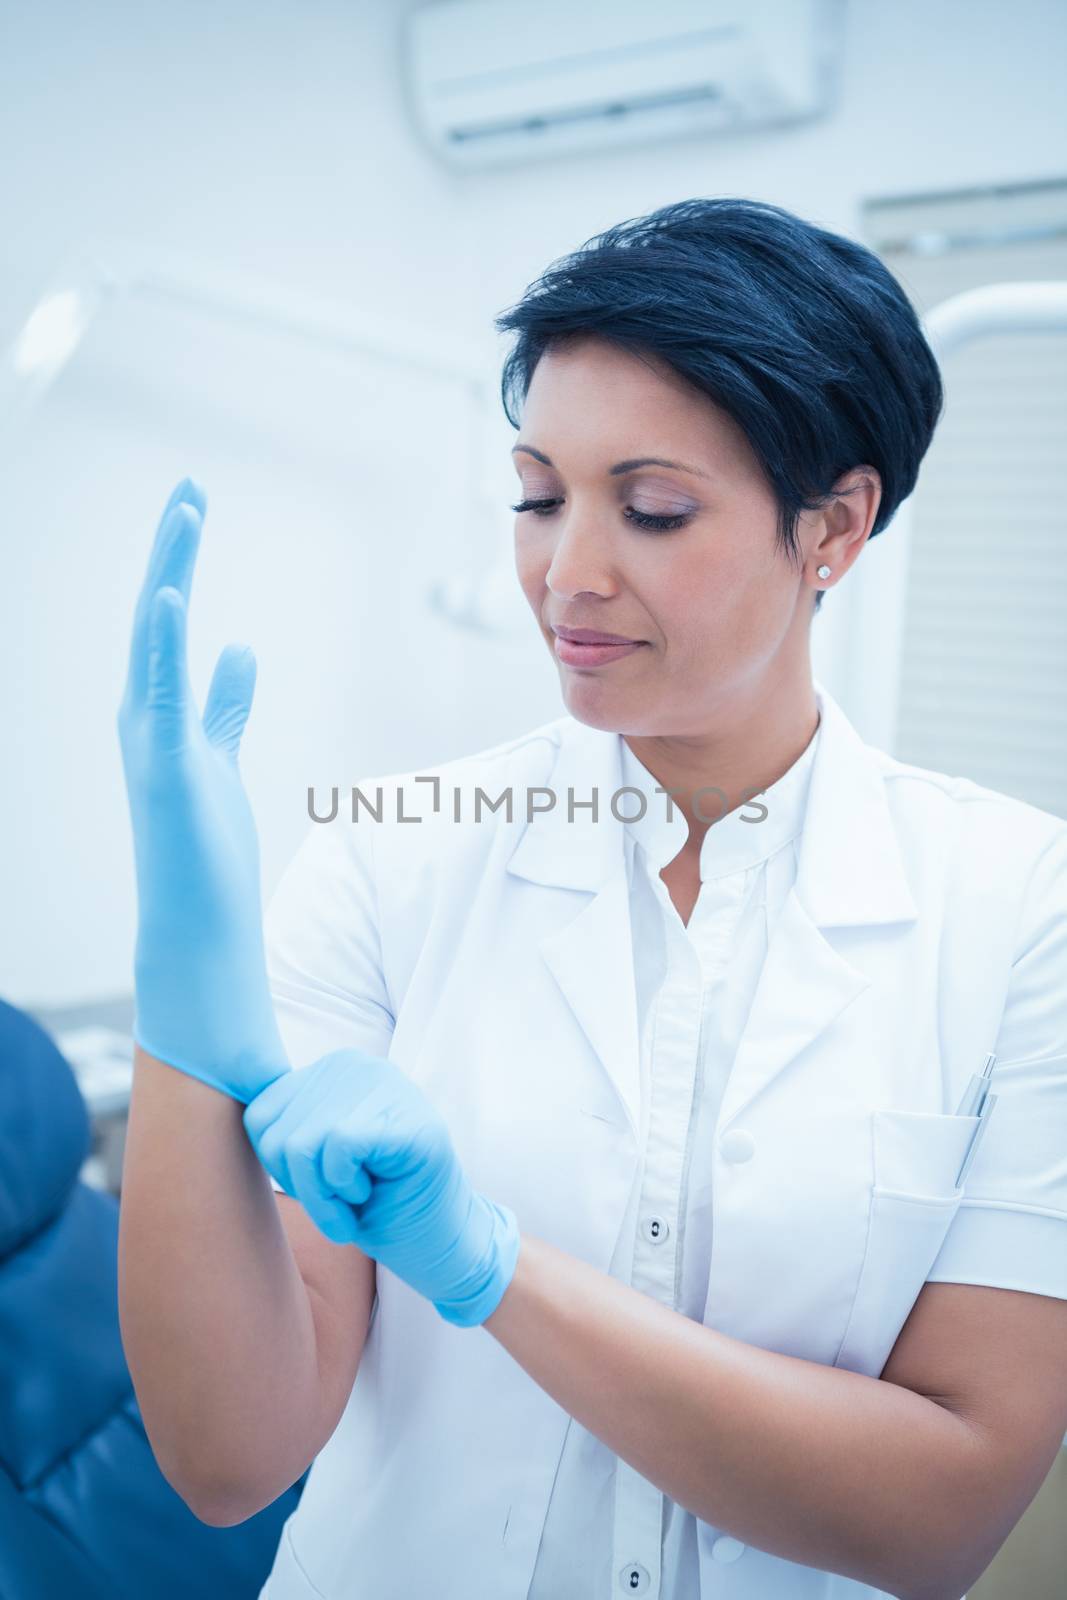 Dentist wearing surgical glove by Wavebreakmedia